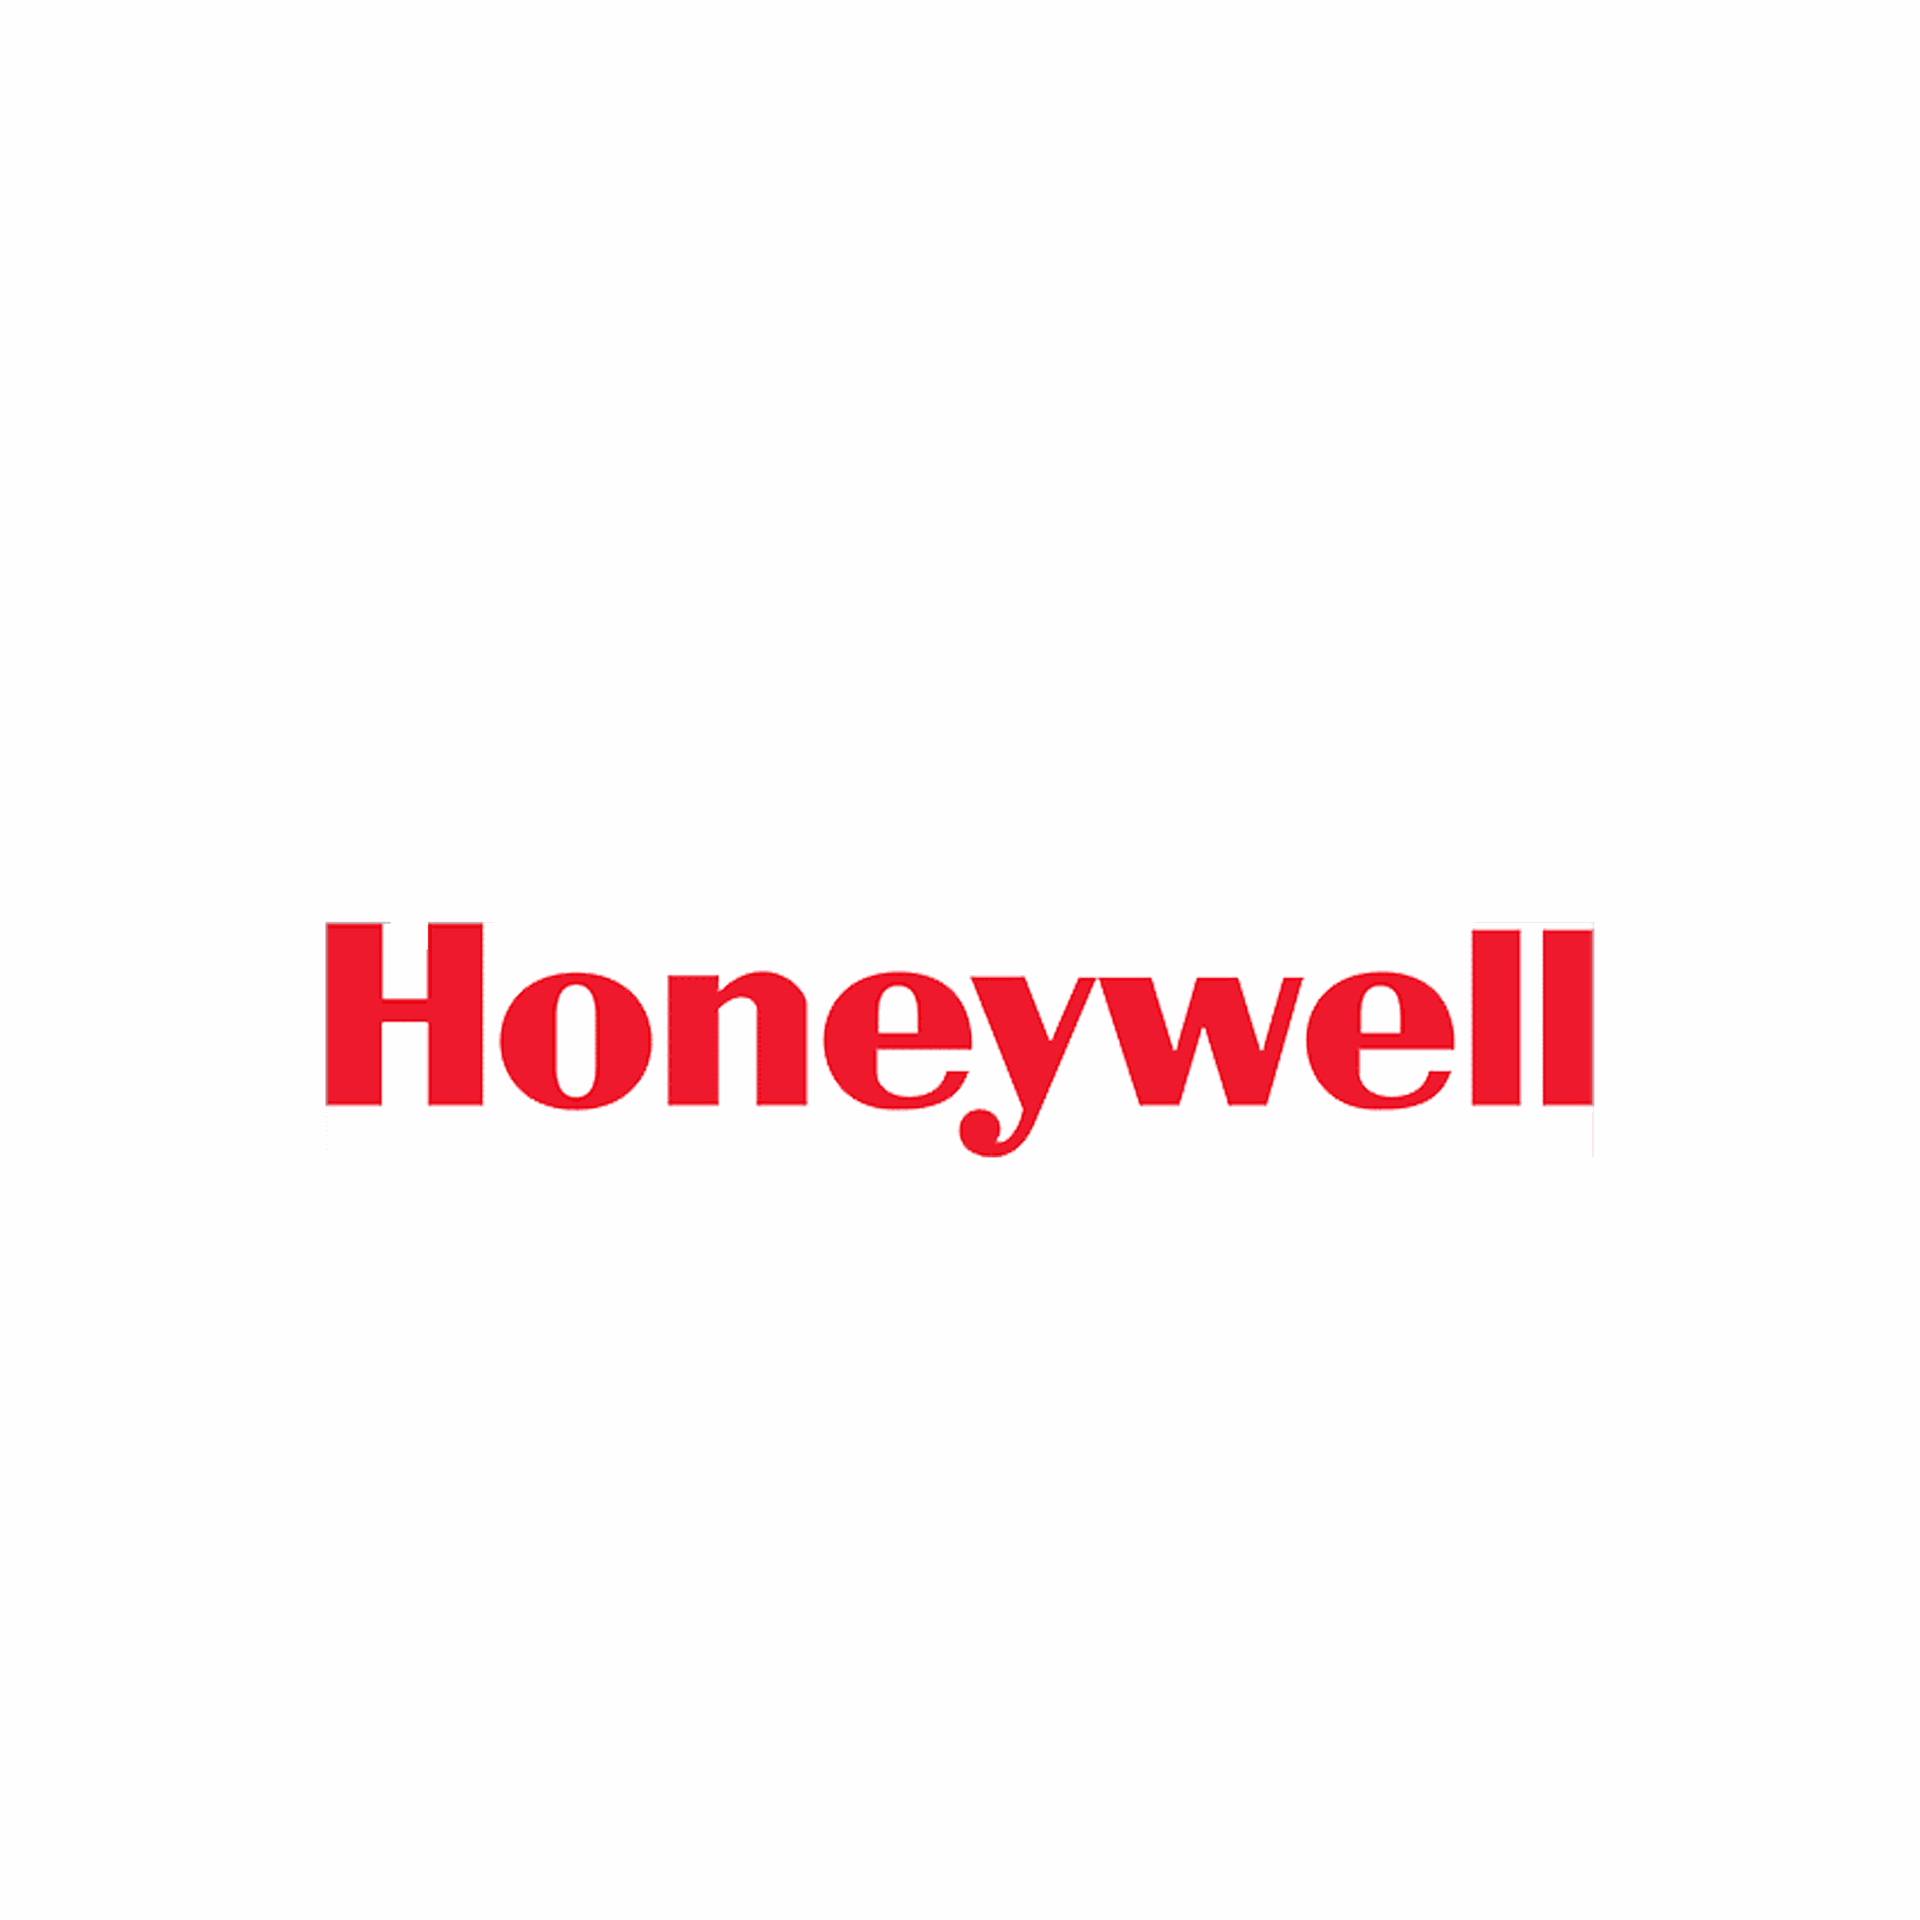 Product Brand: Honeywell